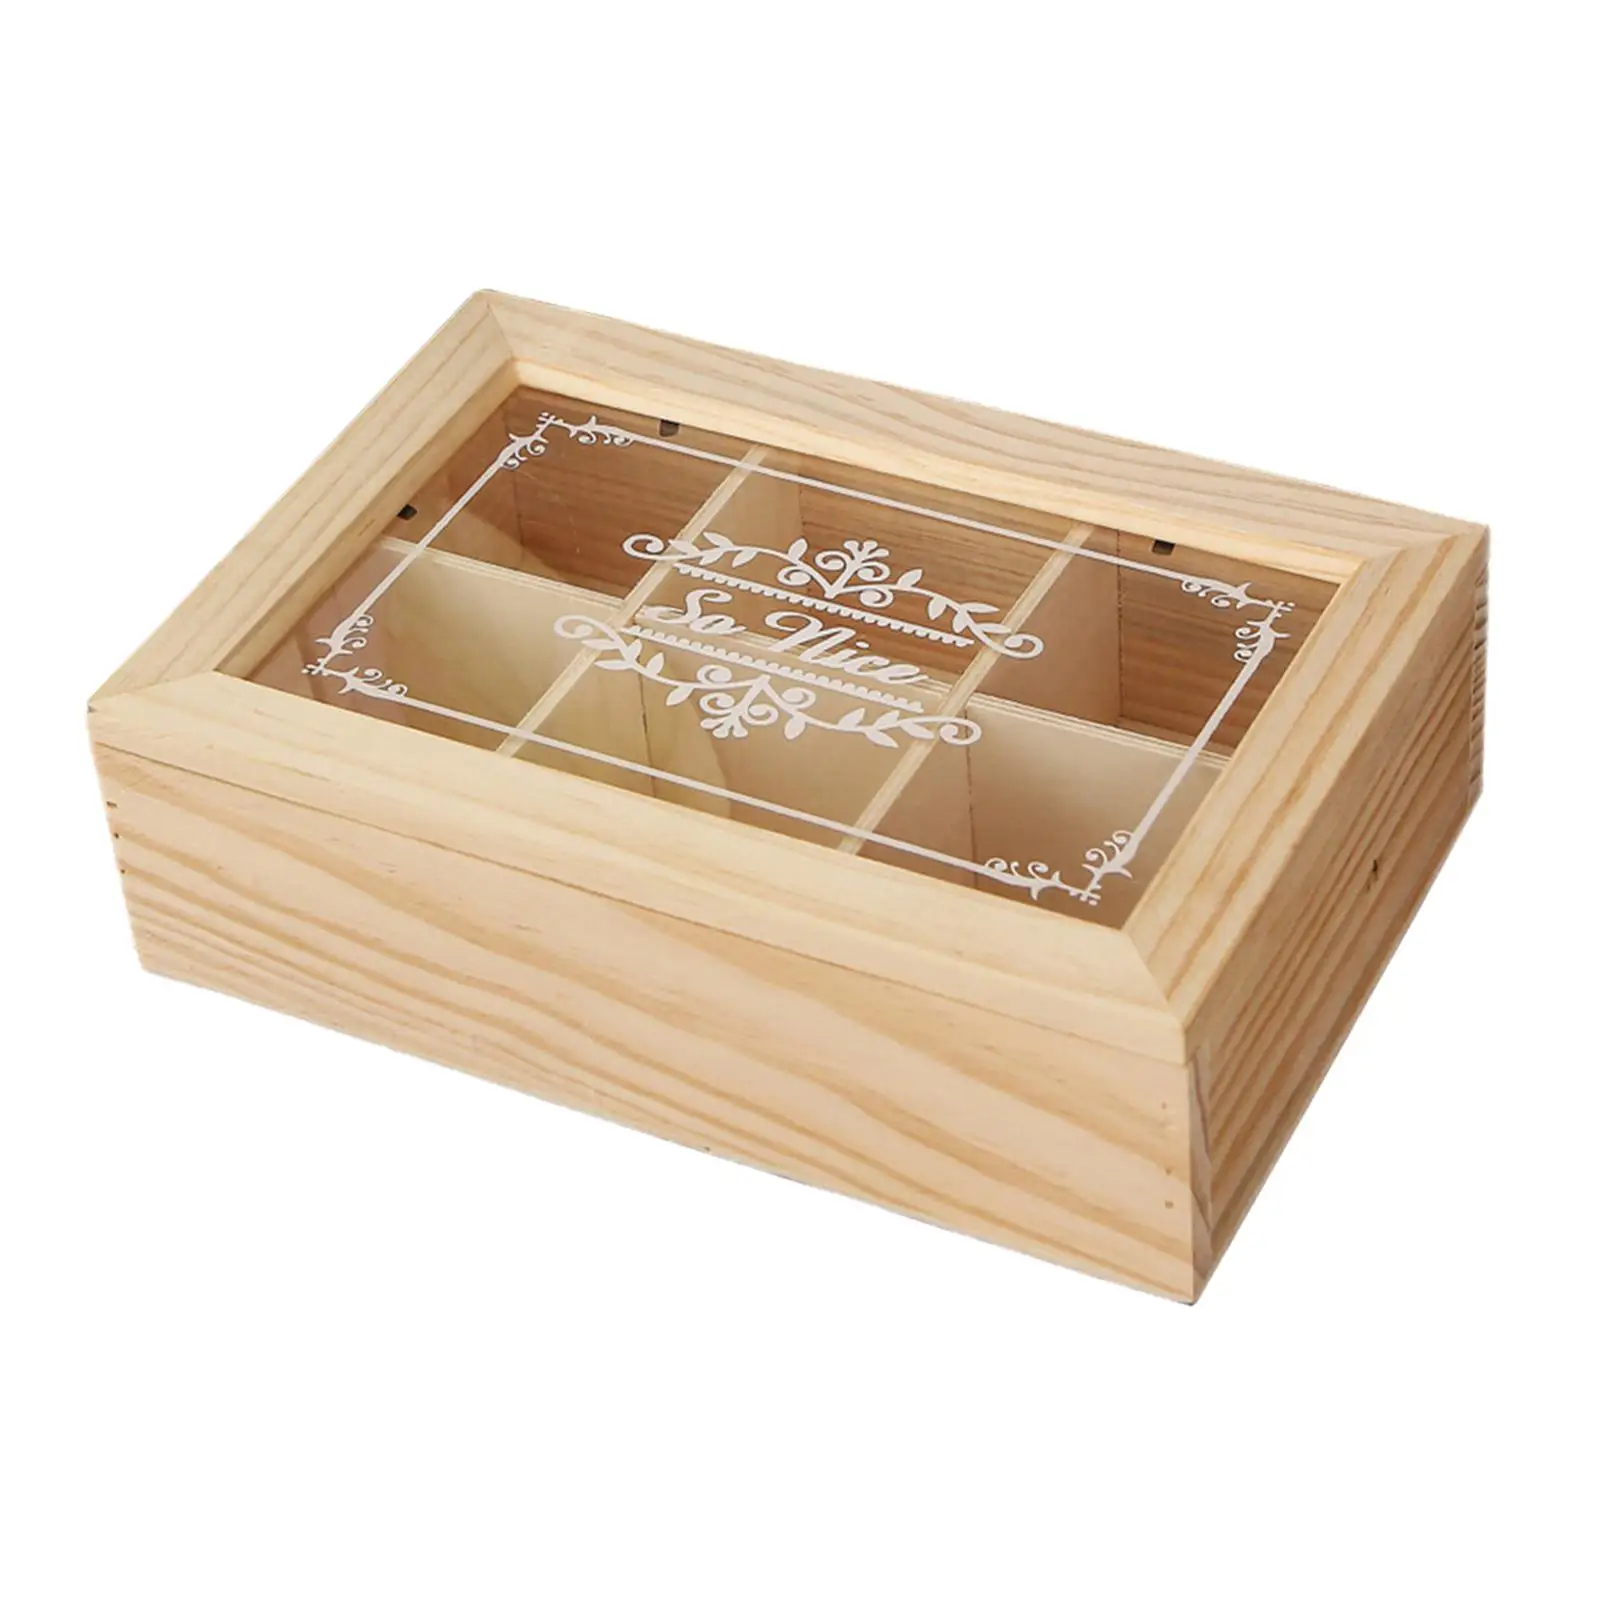 Wooden Tea Box Jewelry Box with Lid Tea Storage Organizer Small Wooden Box